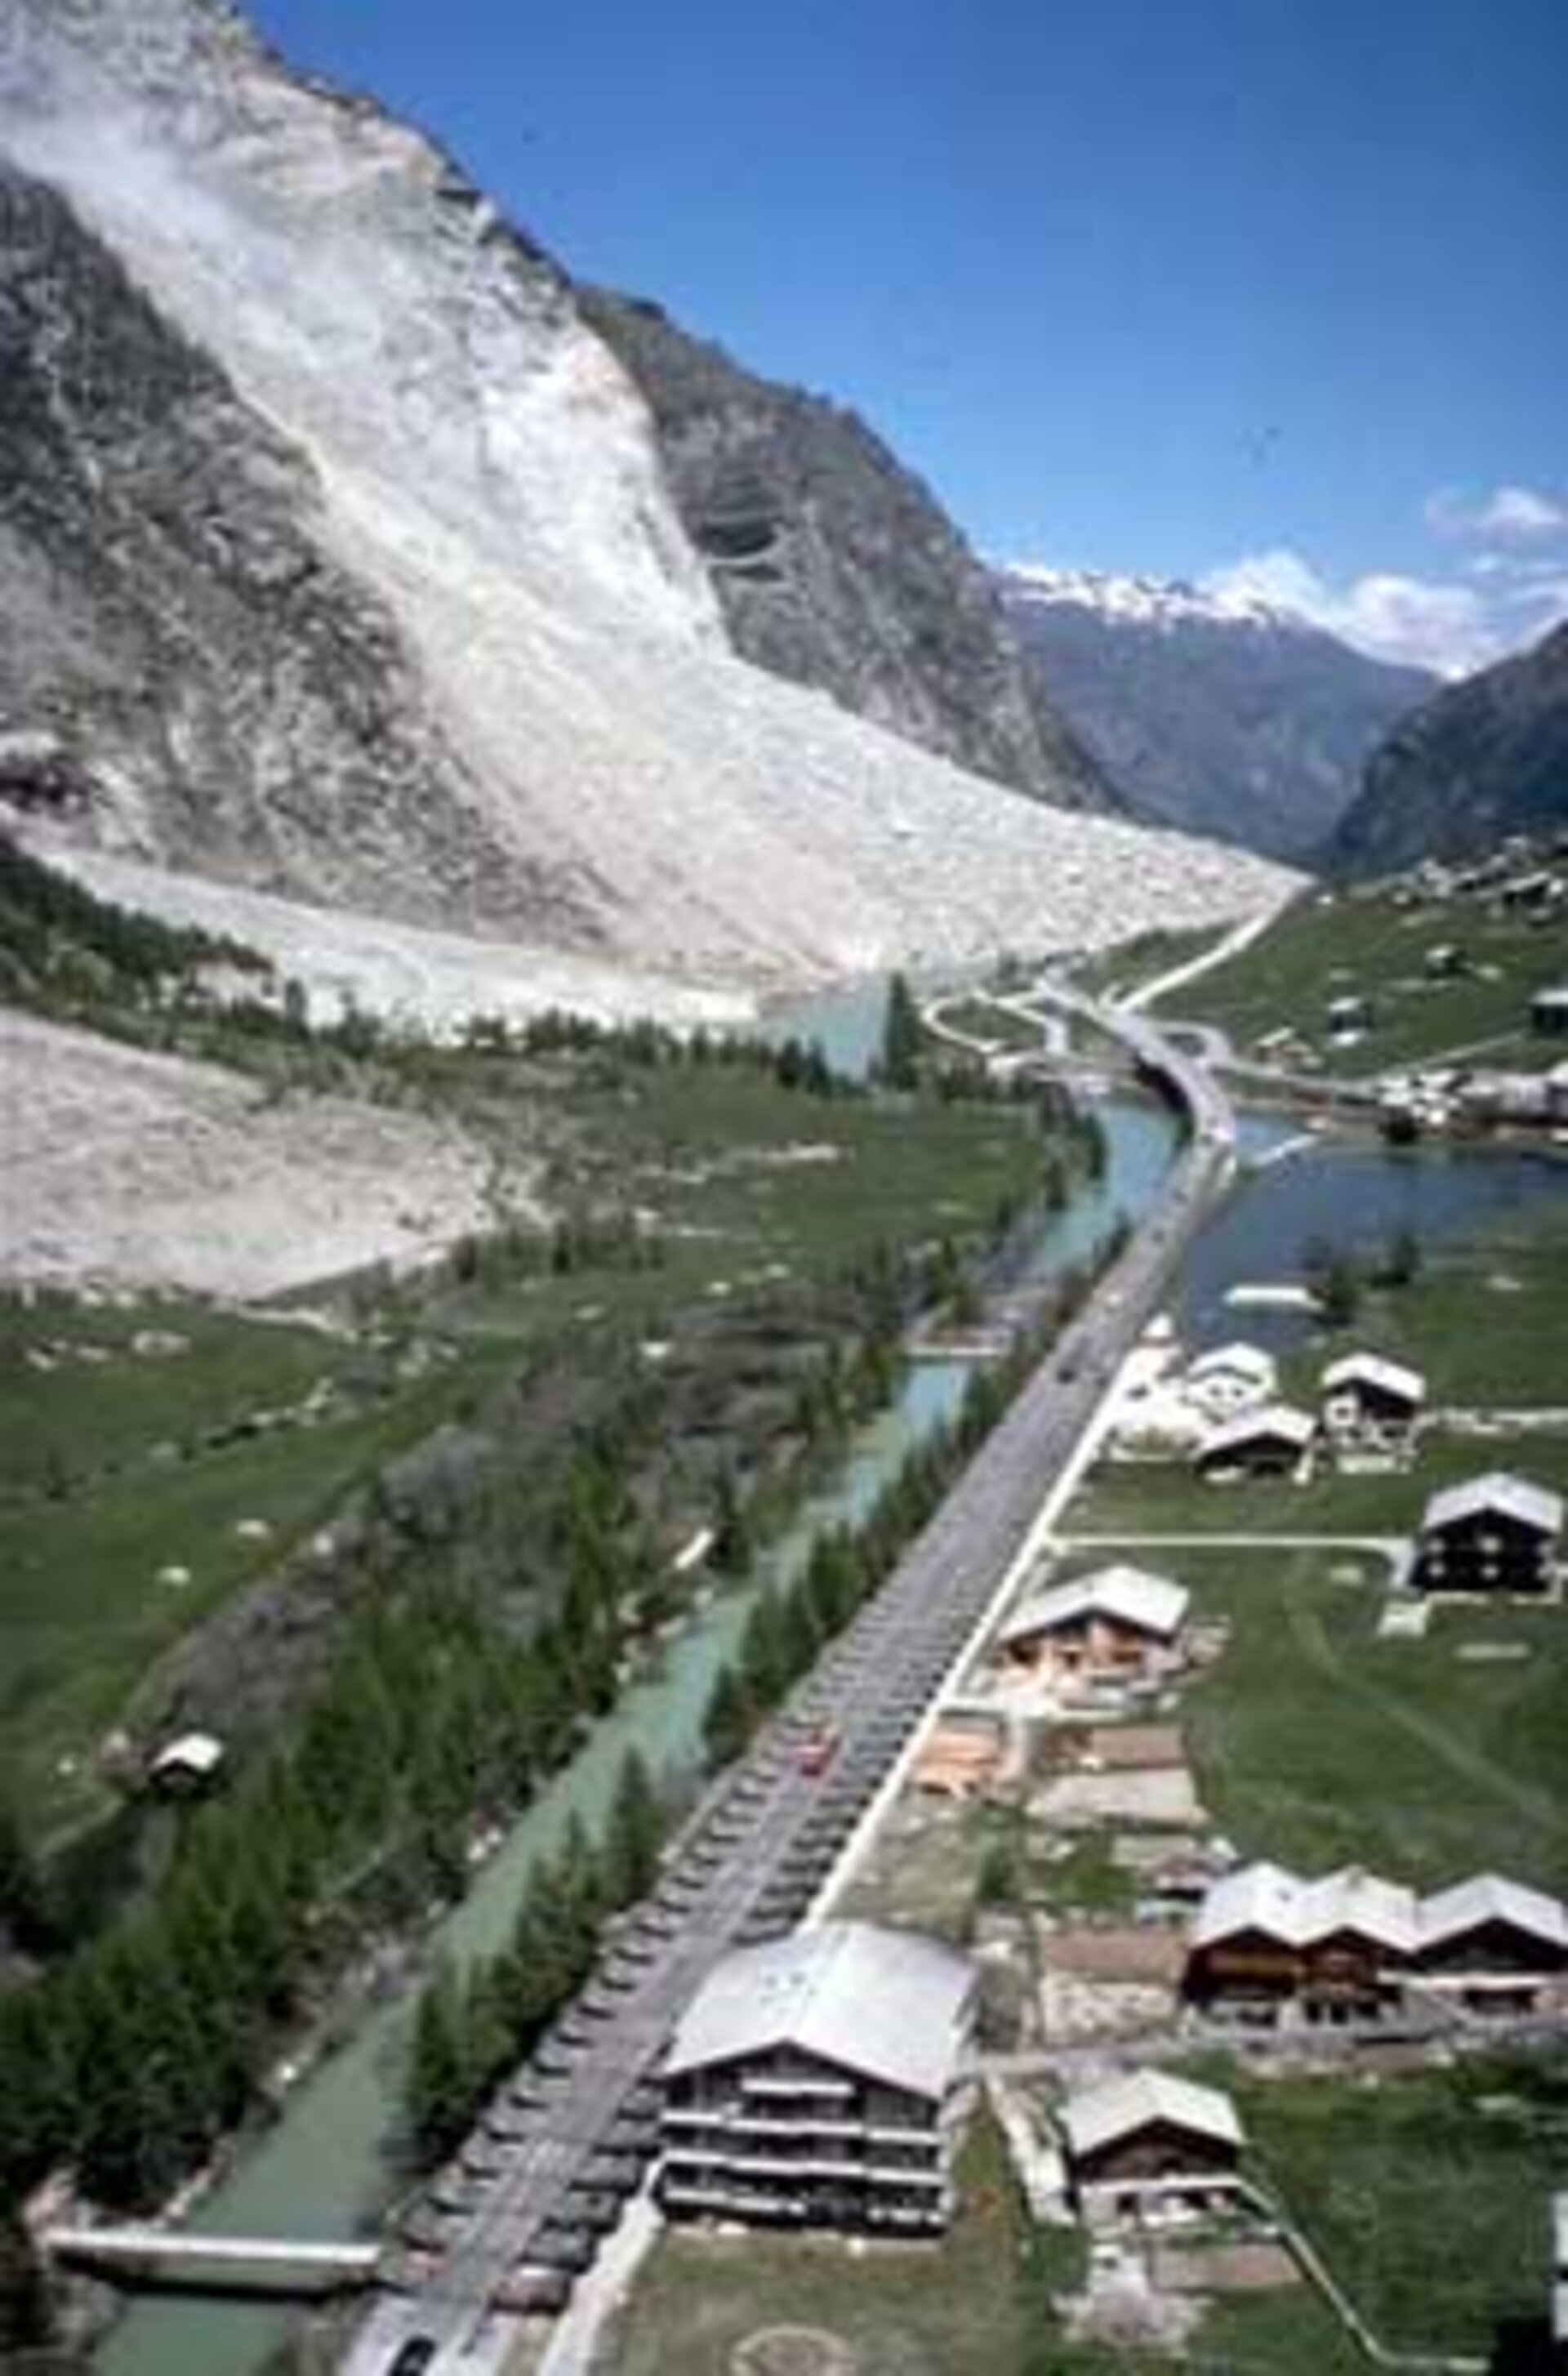 Landslide in a Swiss valley